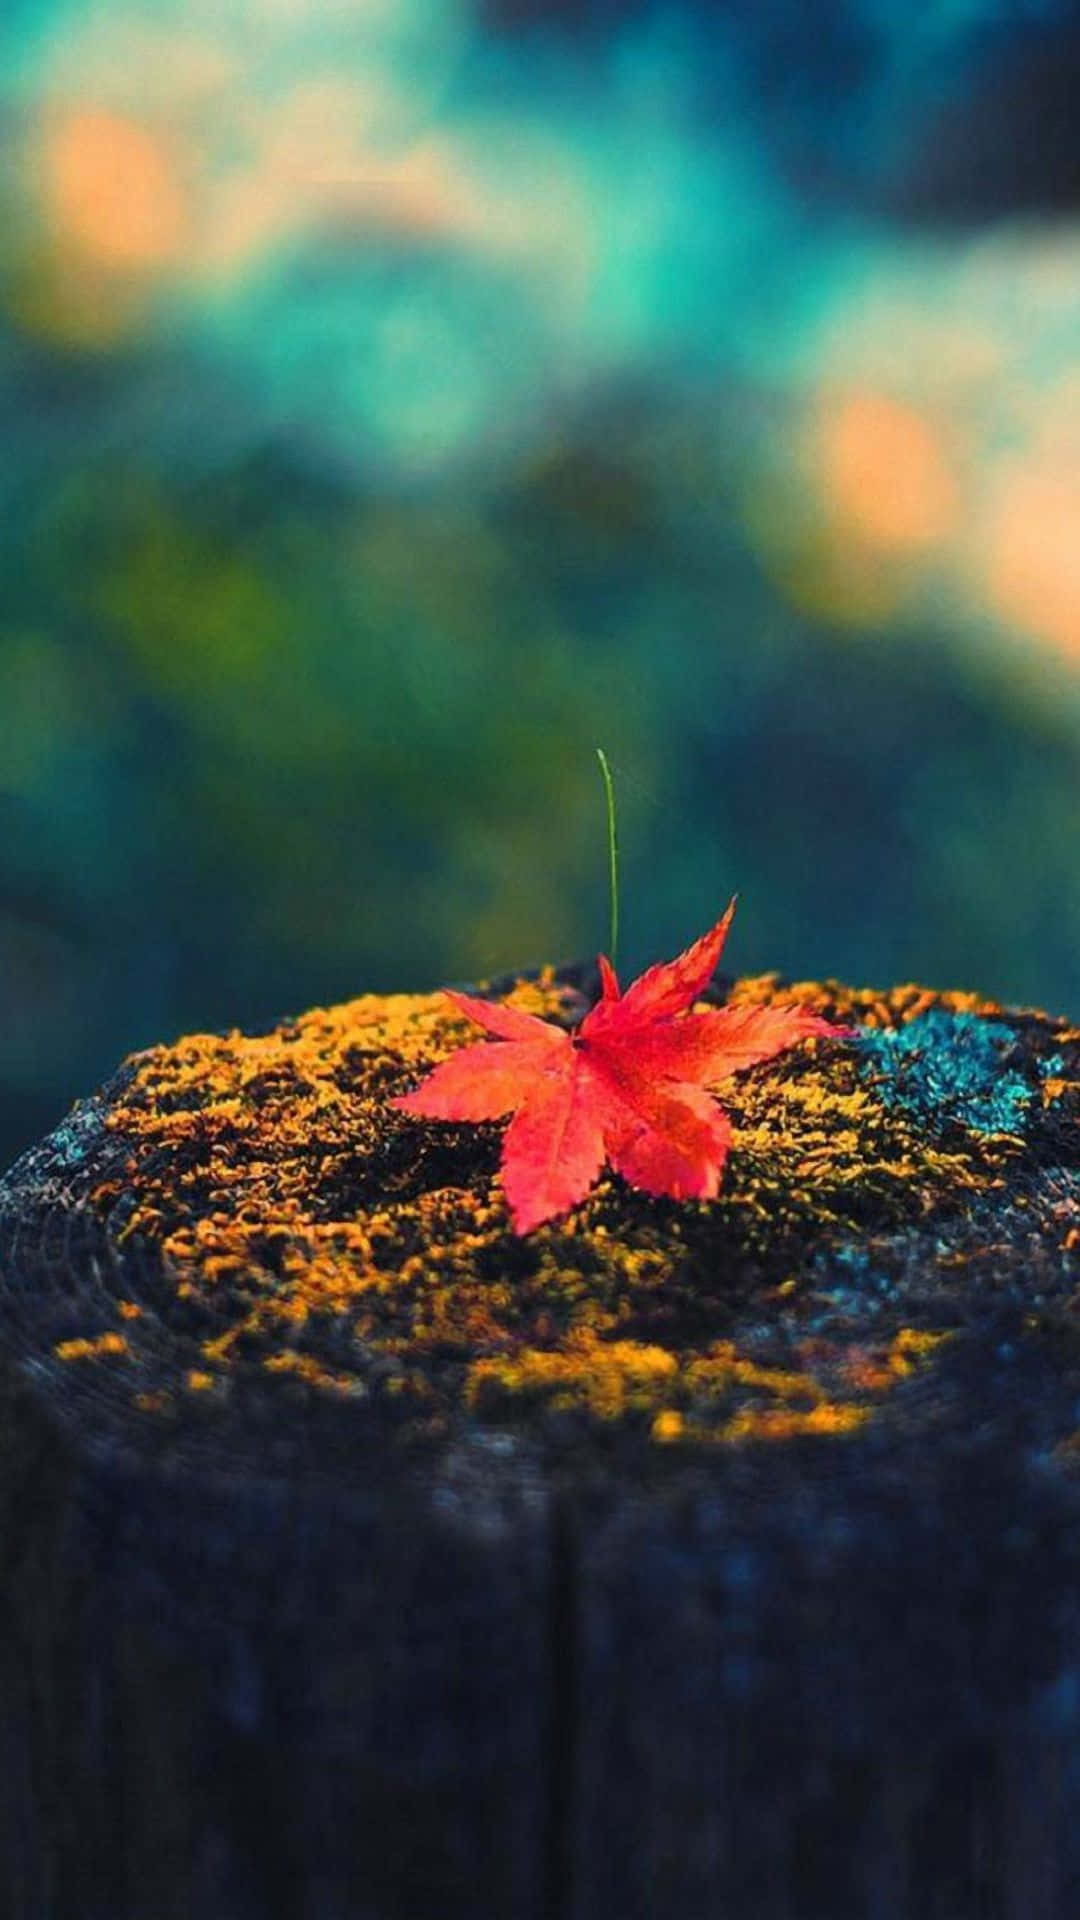 Simple Fall Leaf Blurred Wallpaper